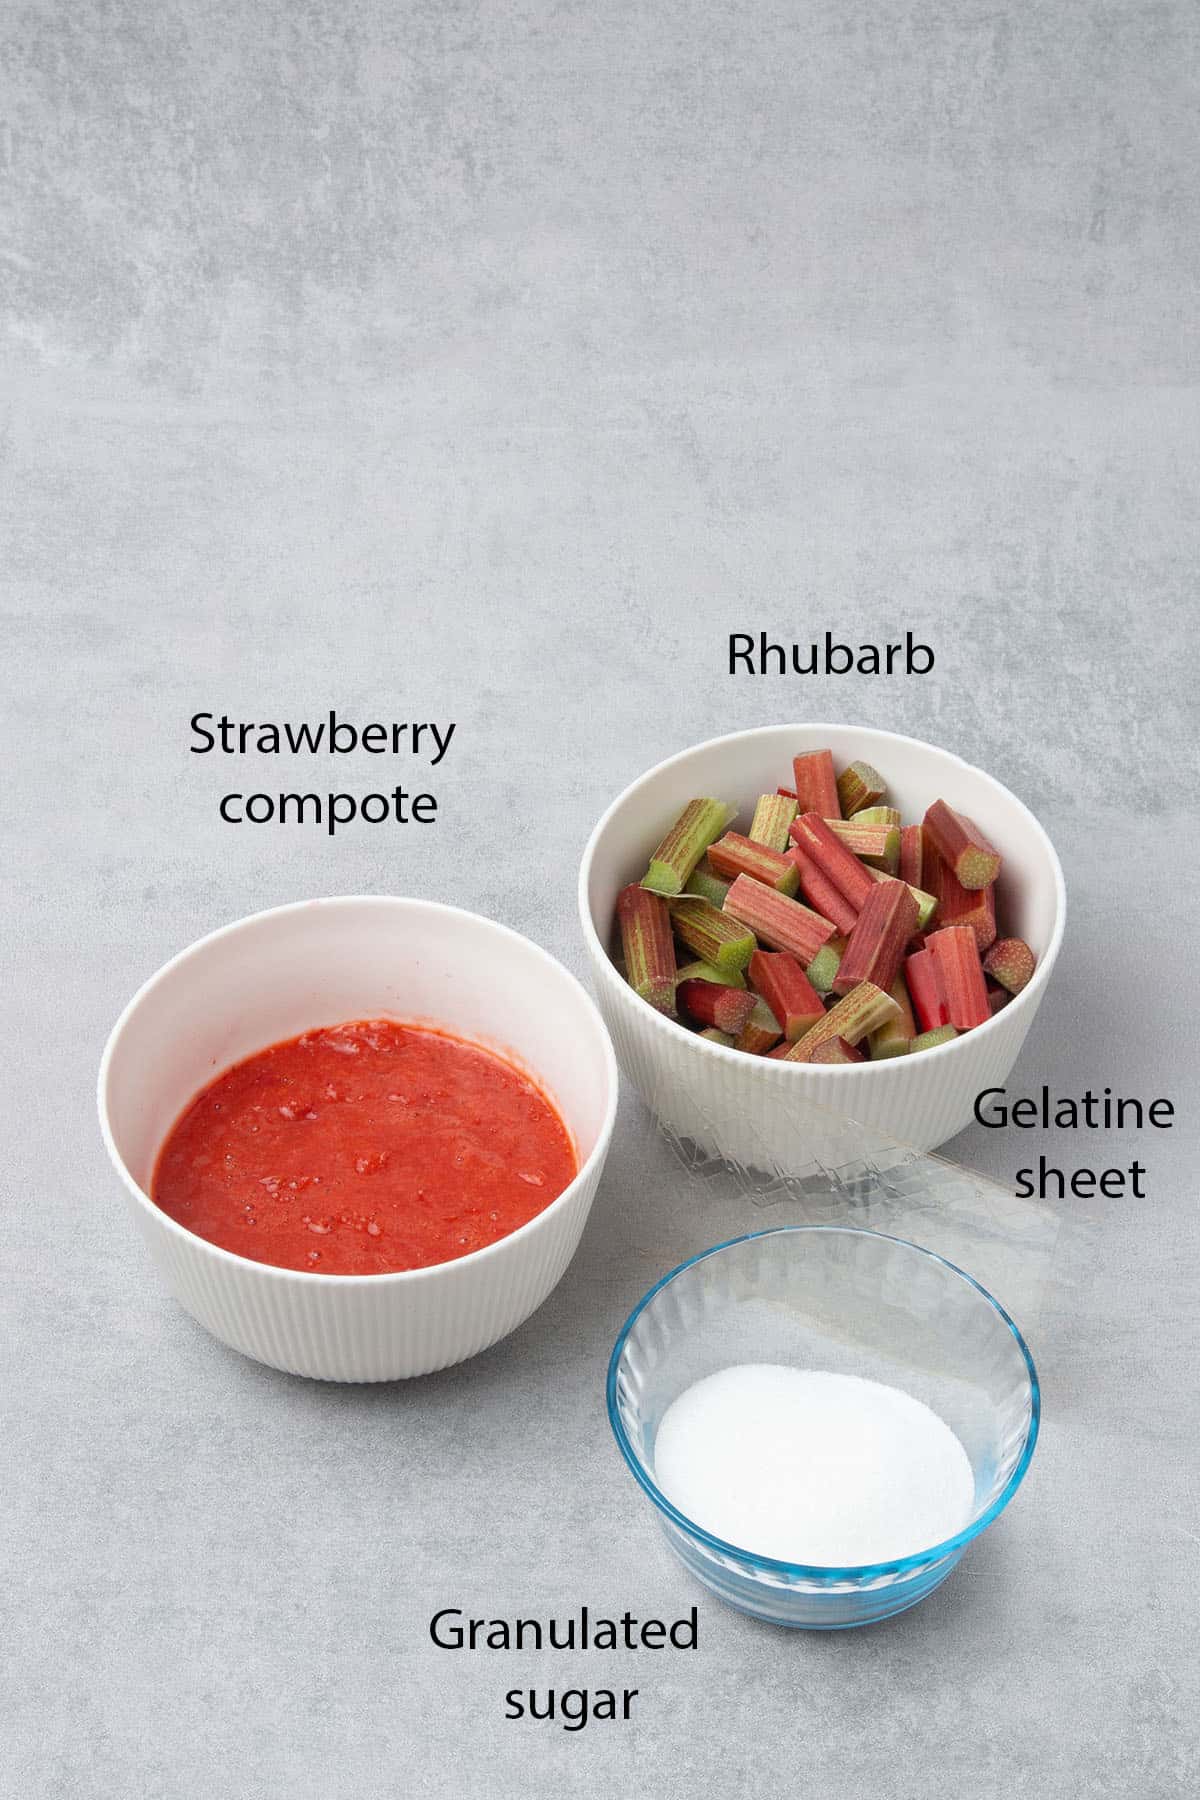 Rhubarb strawberry compote ingredients.